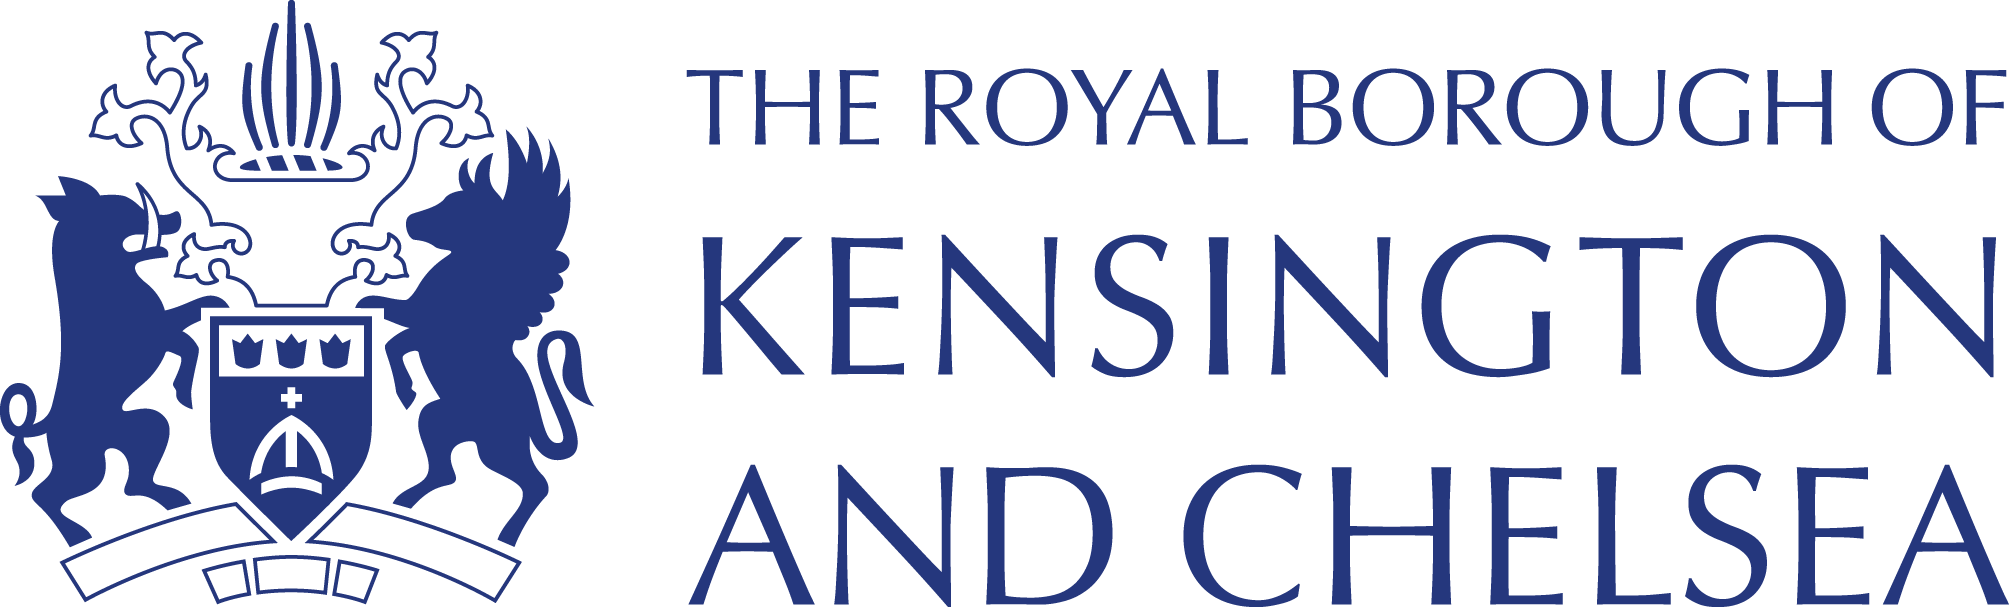 logo for Royal Borough of Kensington and Chelsea